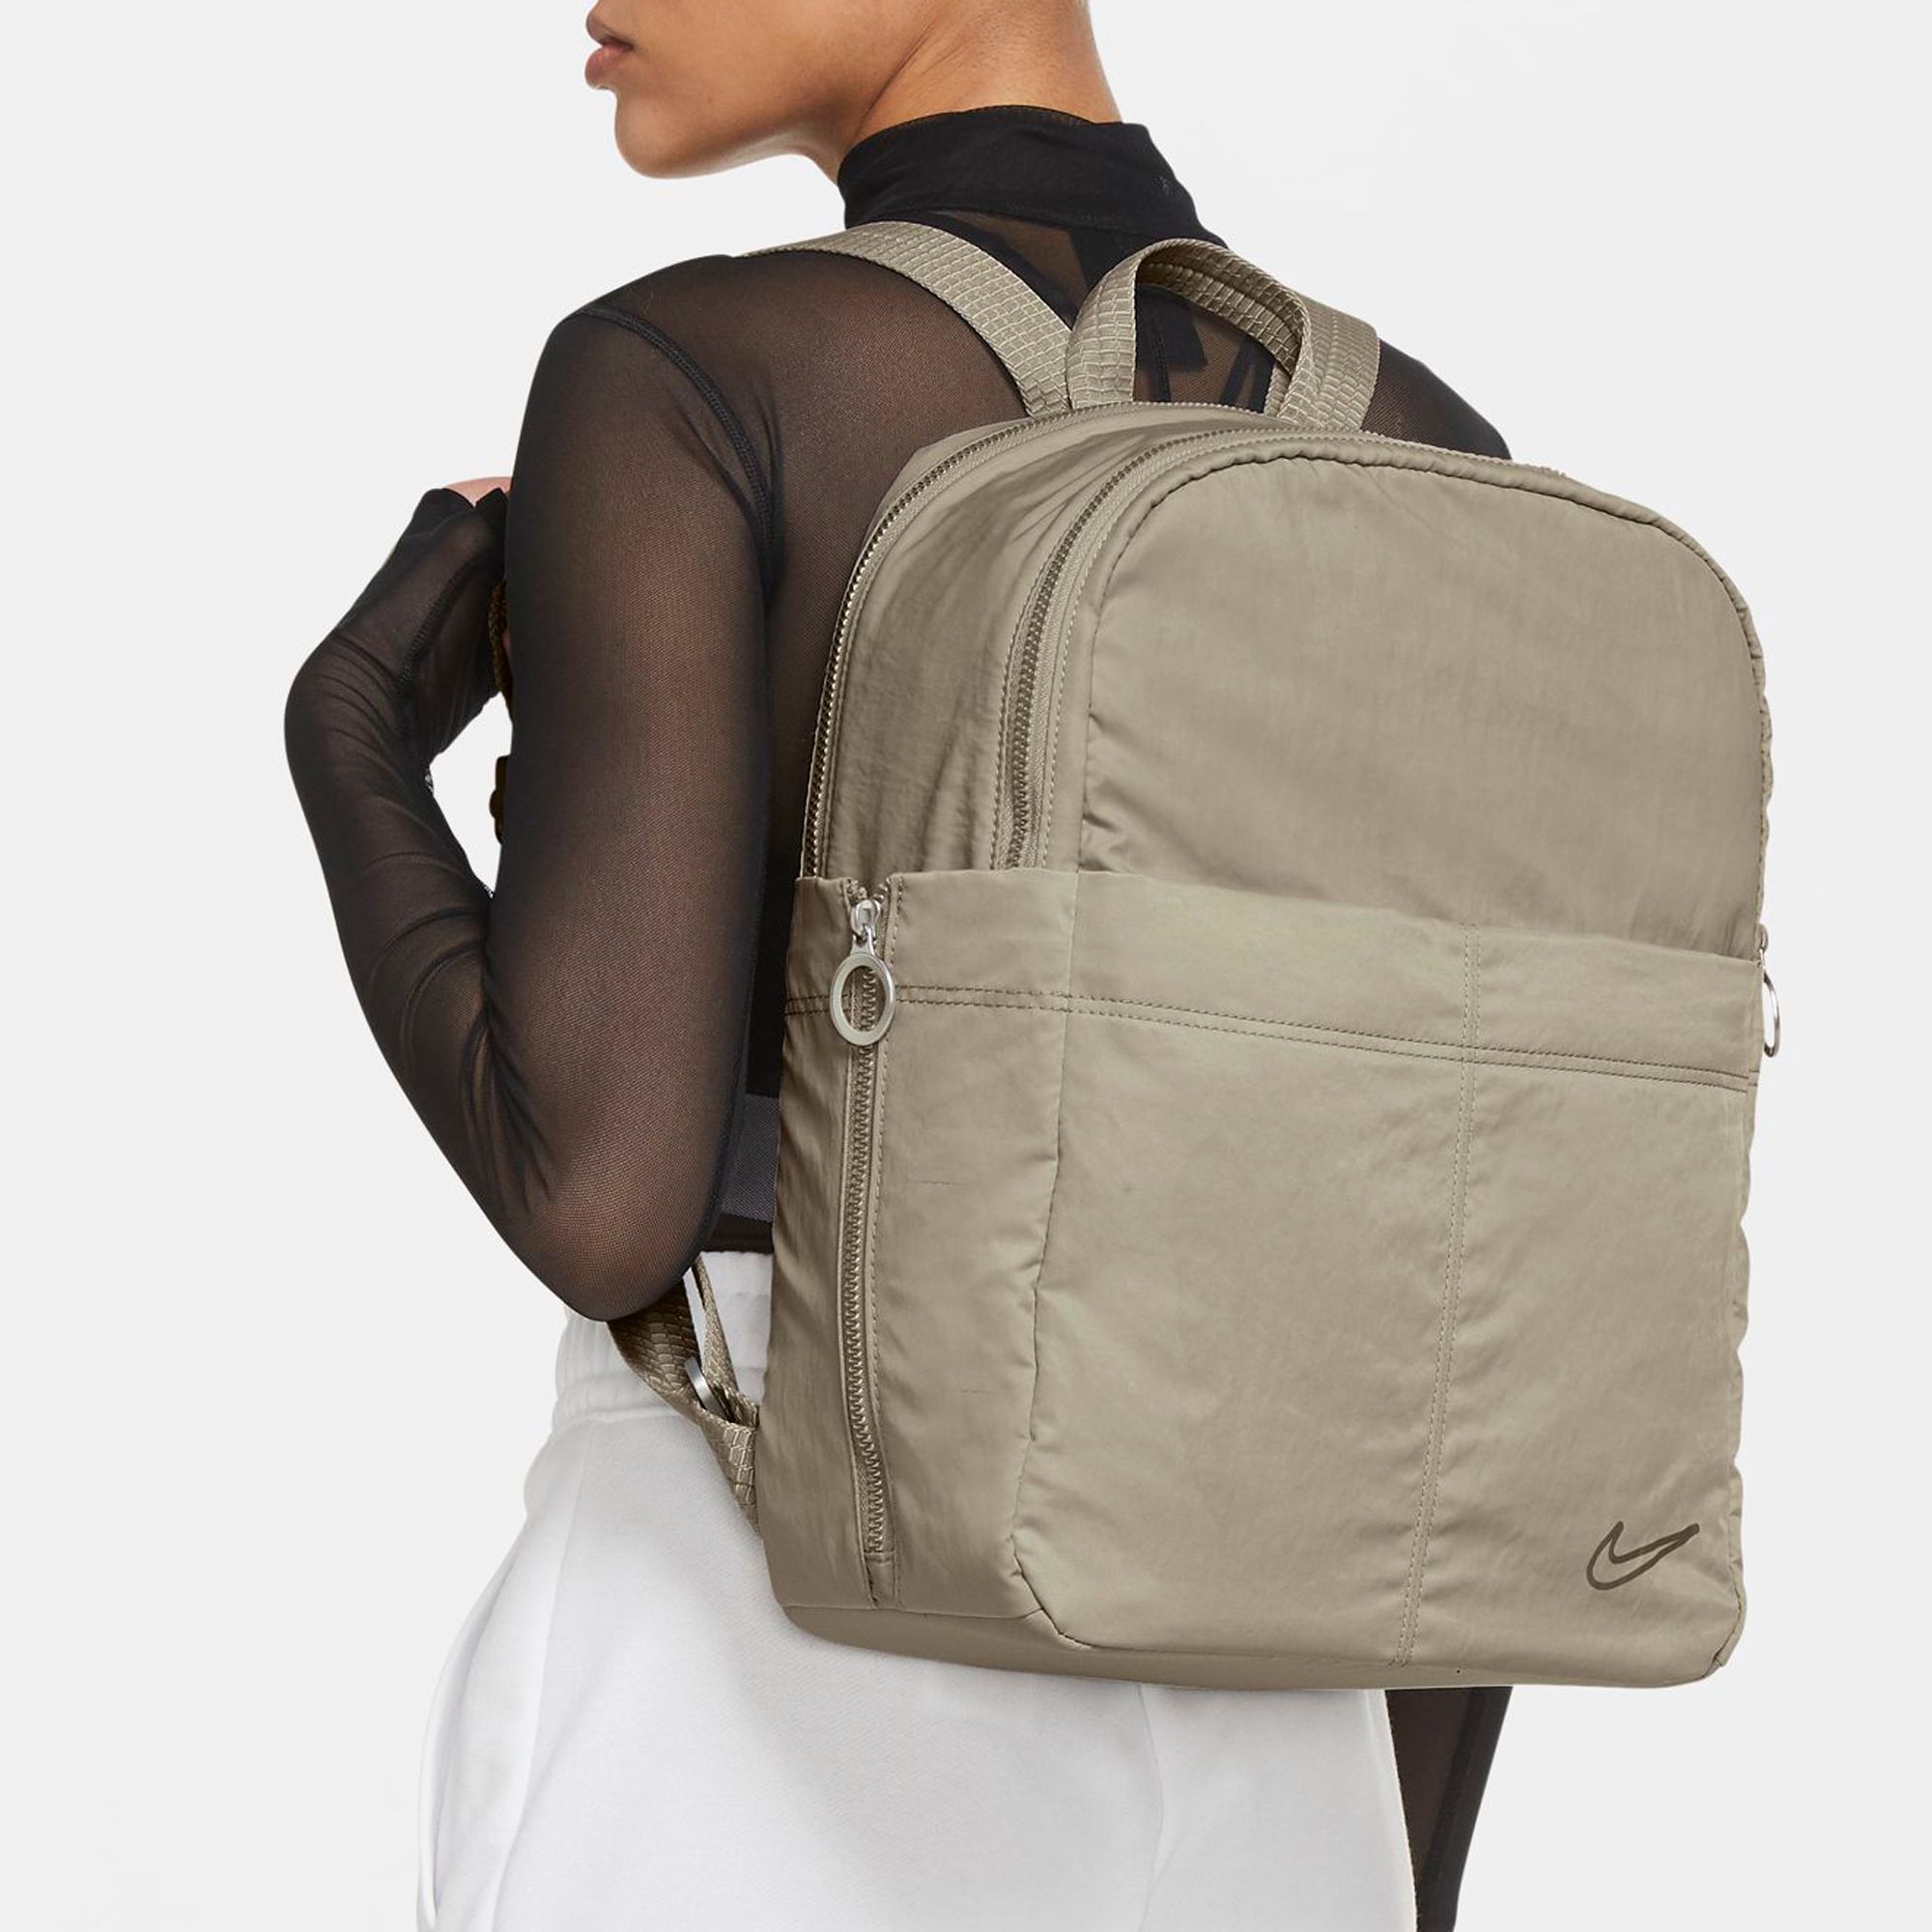 New Nike one Luxe School Backpack Women's One SZ Black CV0061-010